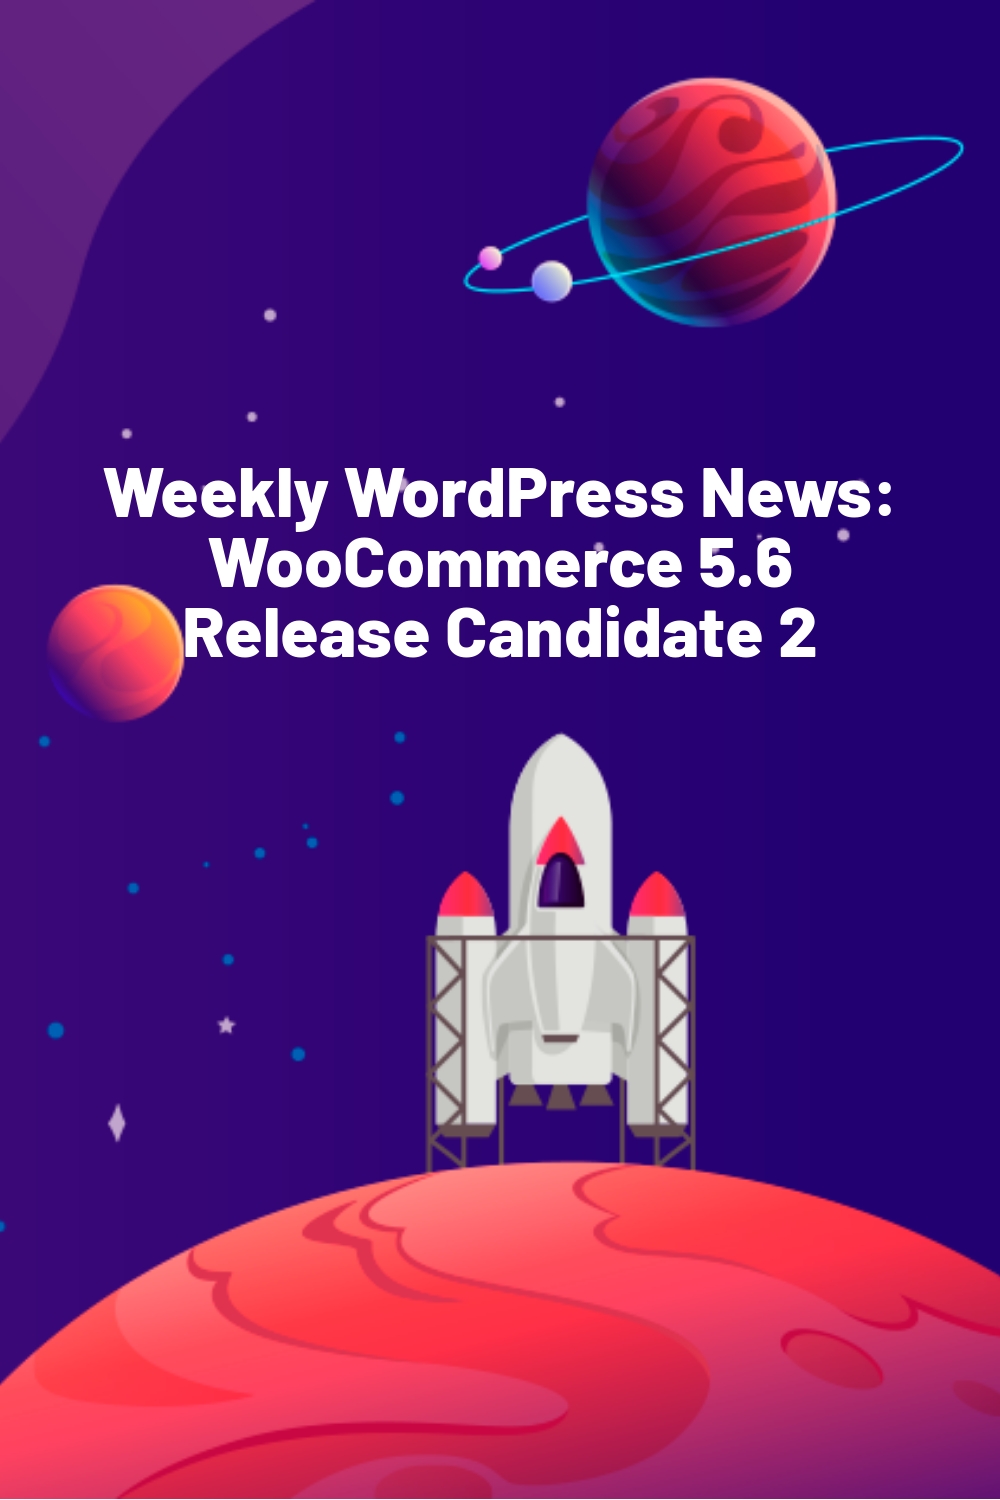 Weekly WordPress News: WooCommerce 5.6 Release Candidate 2